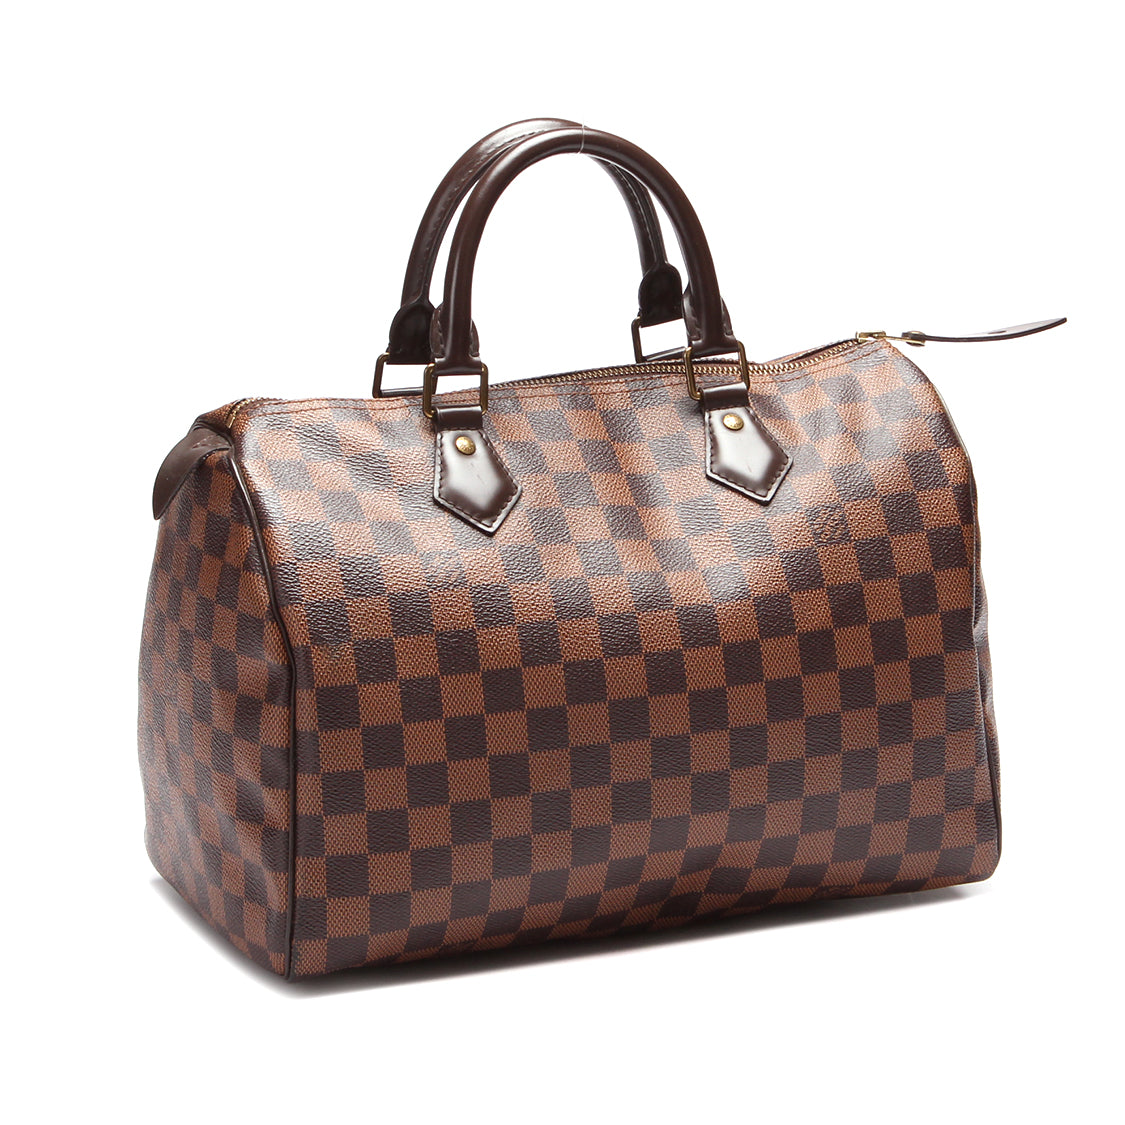 Louis Vuitton Damier Ebene Speedy 30 Canvas Handbag in Excellent condition